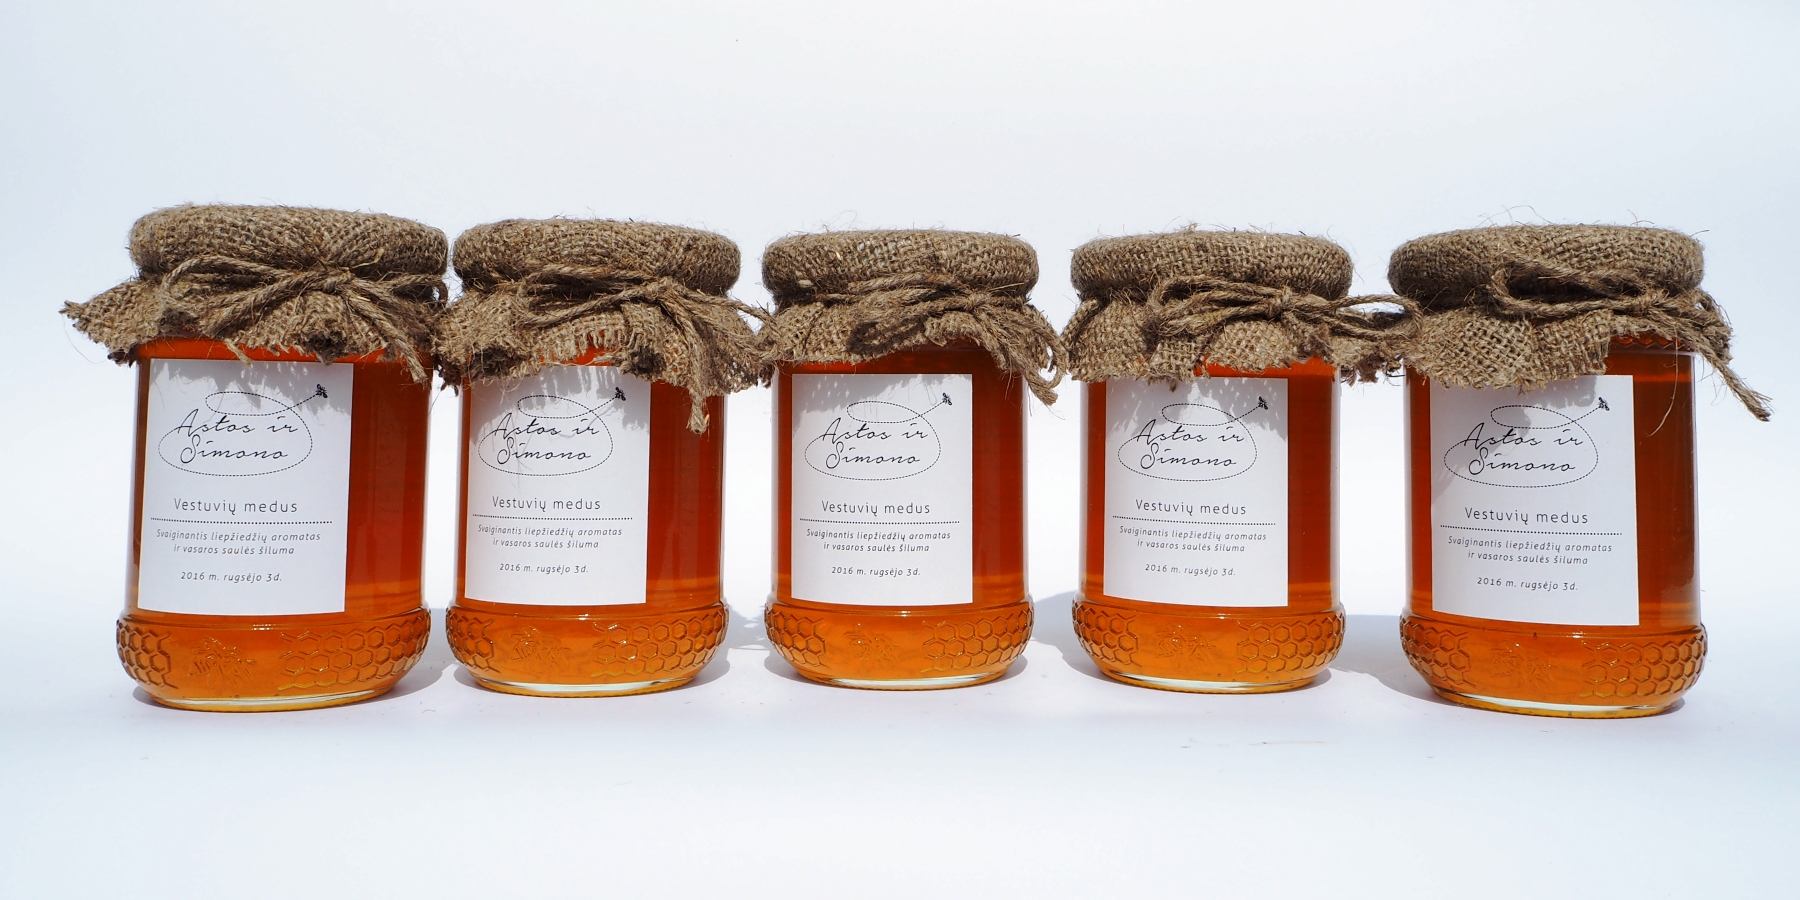 Medus – saldi dovana vestuvių svečiams